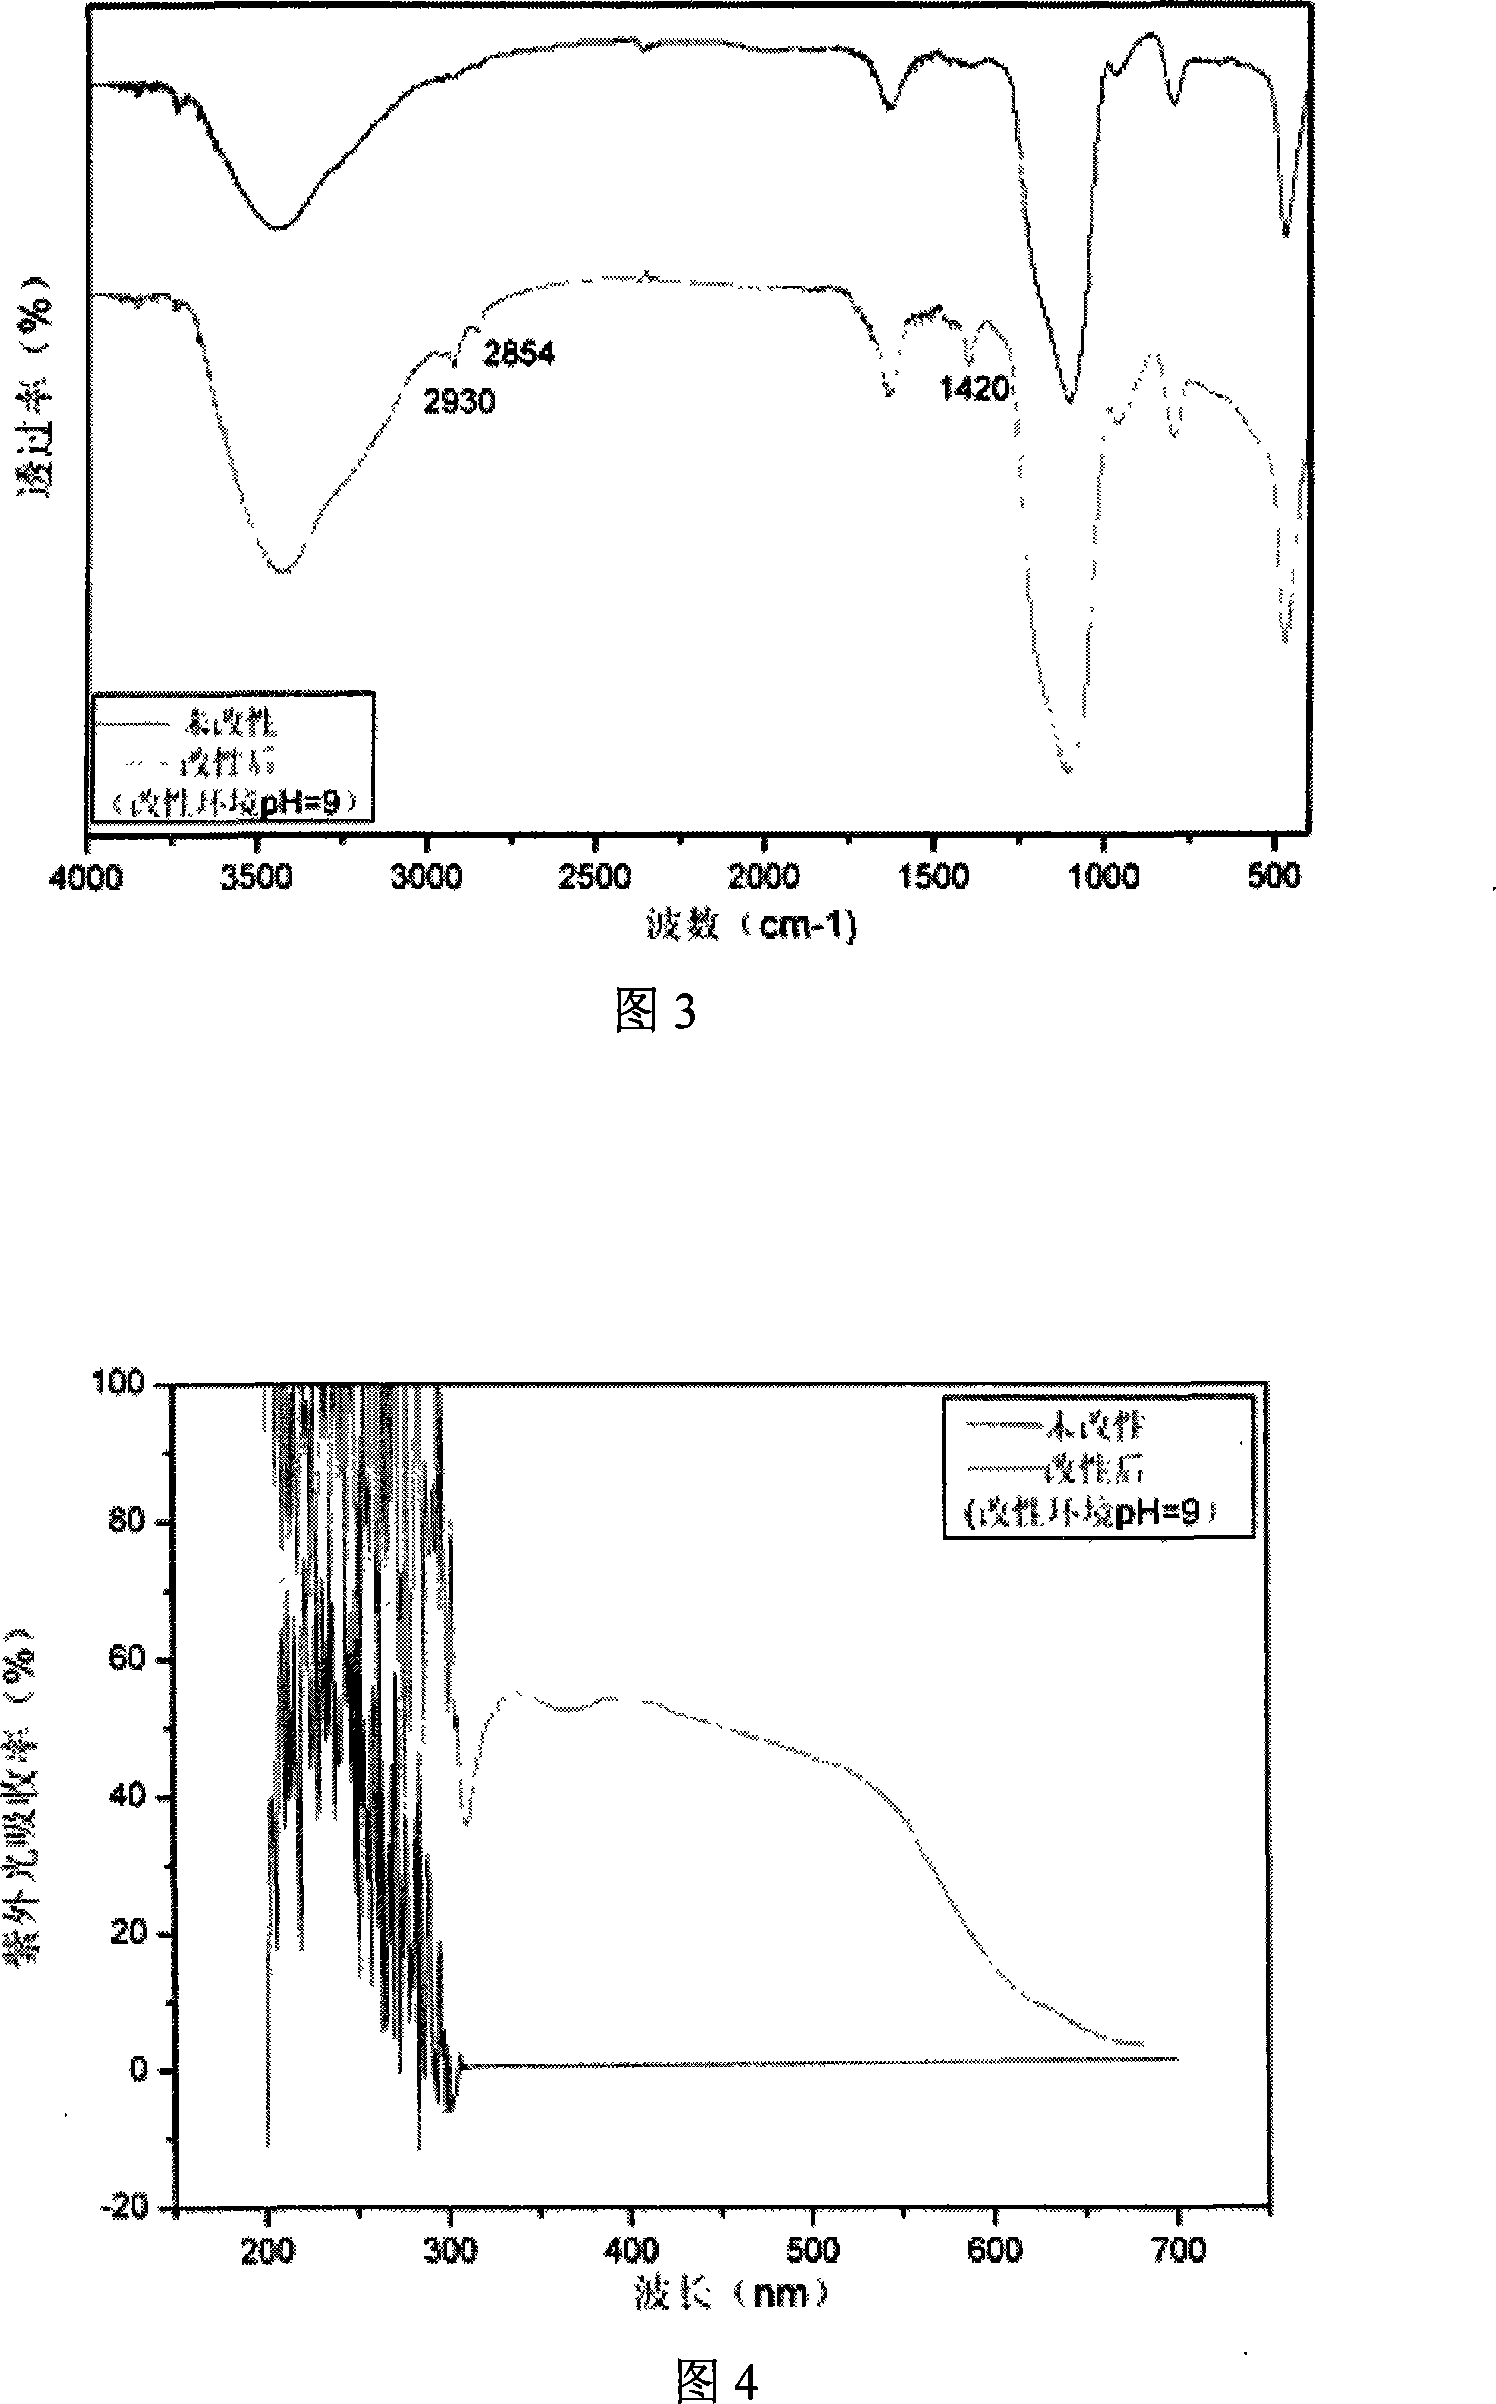 Method for preparing lipophilic nano SiO2 powder